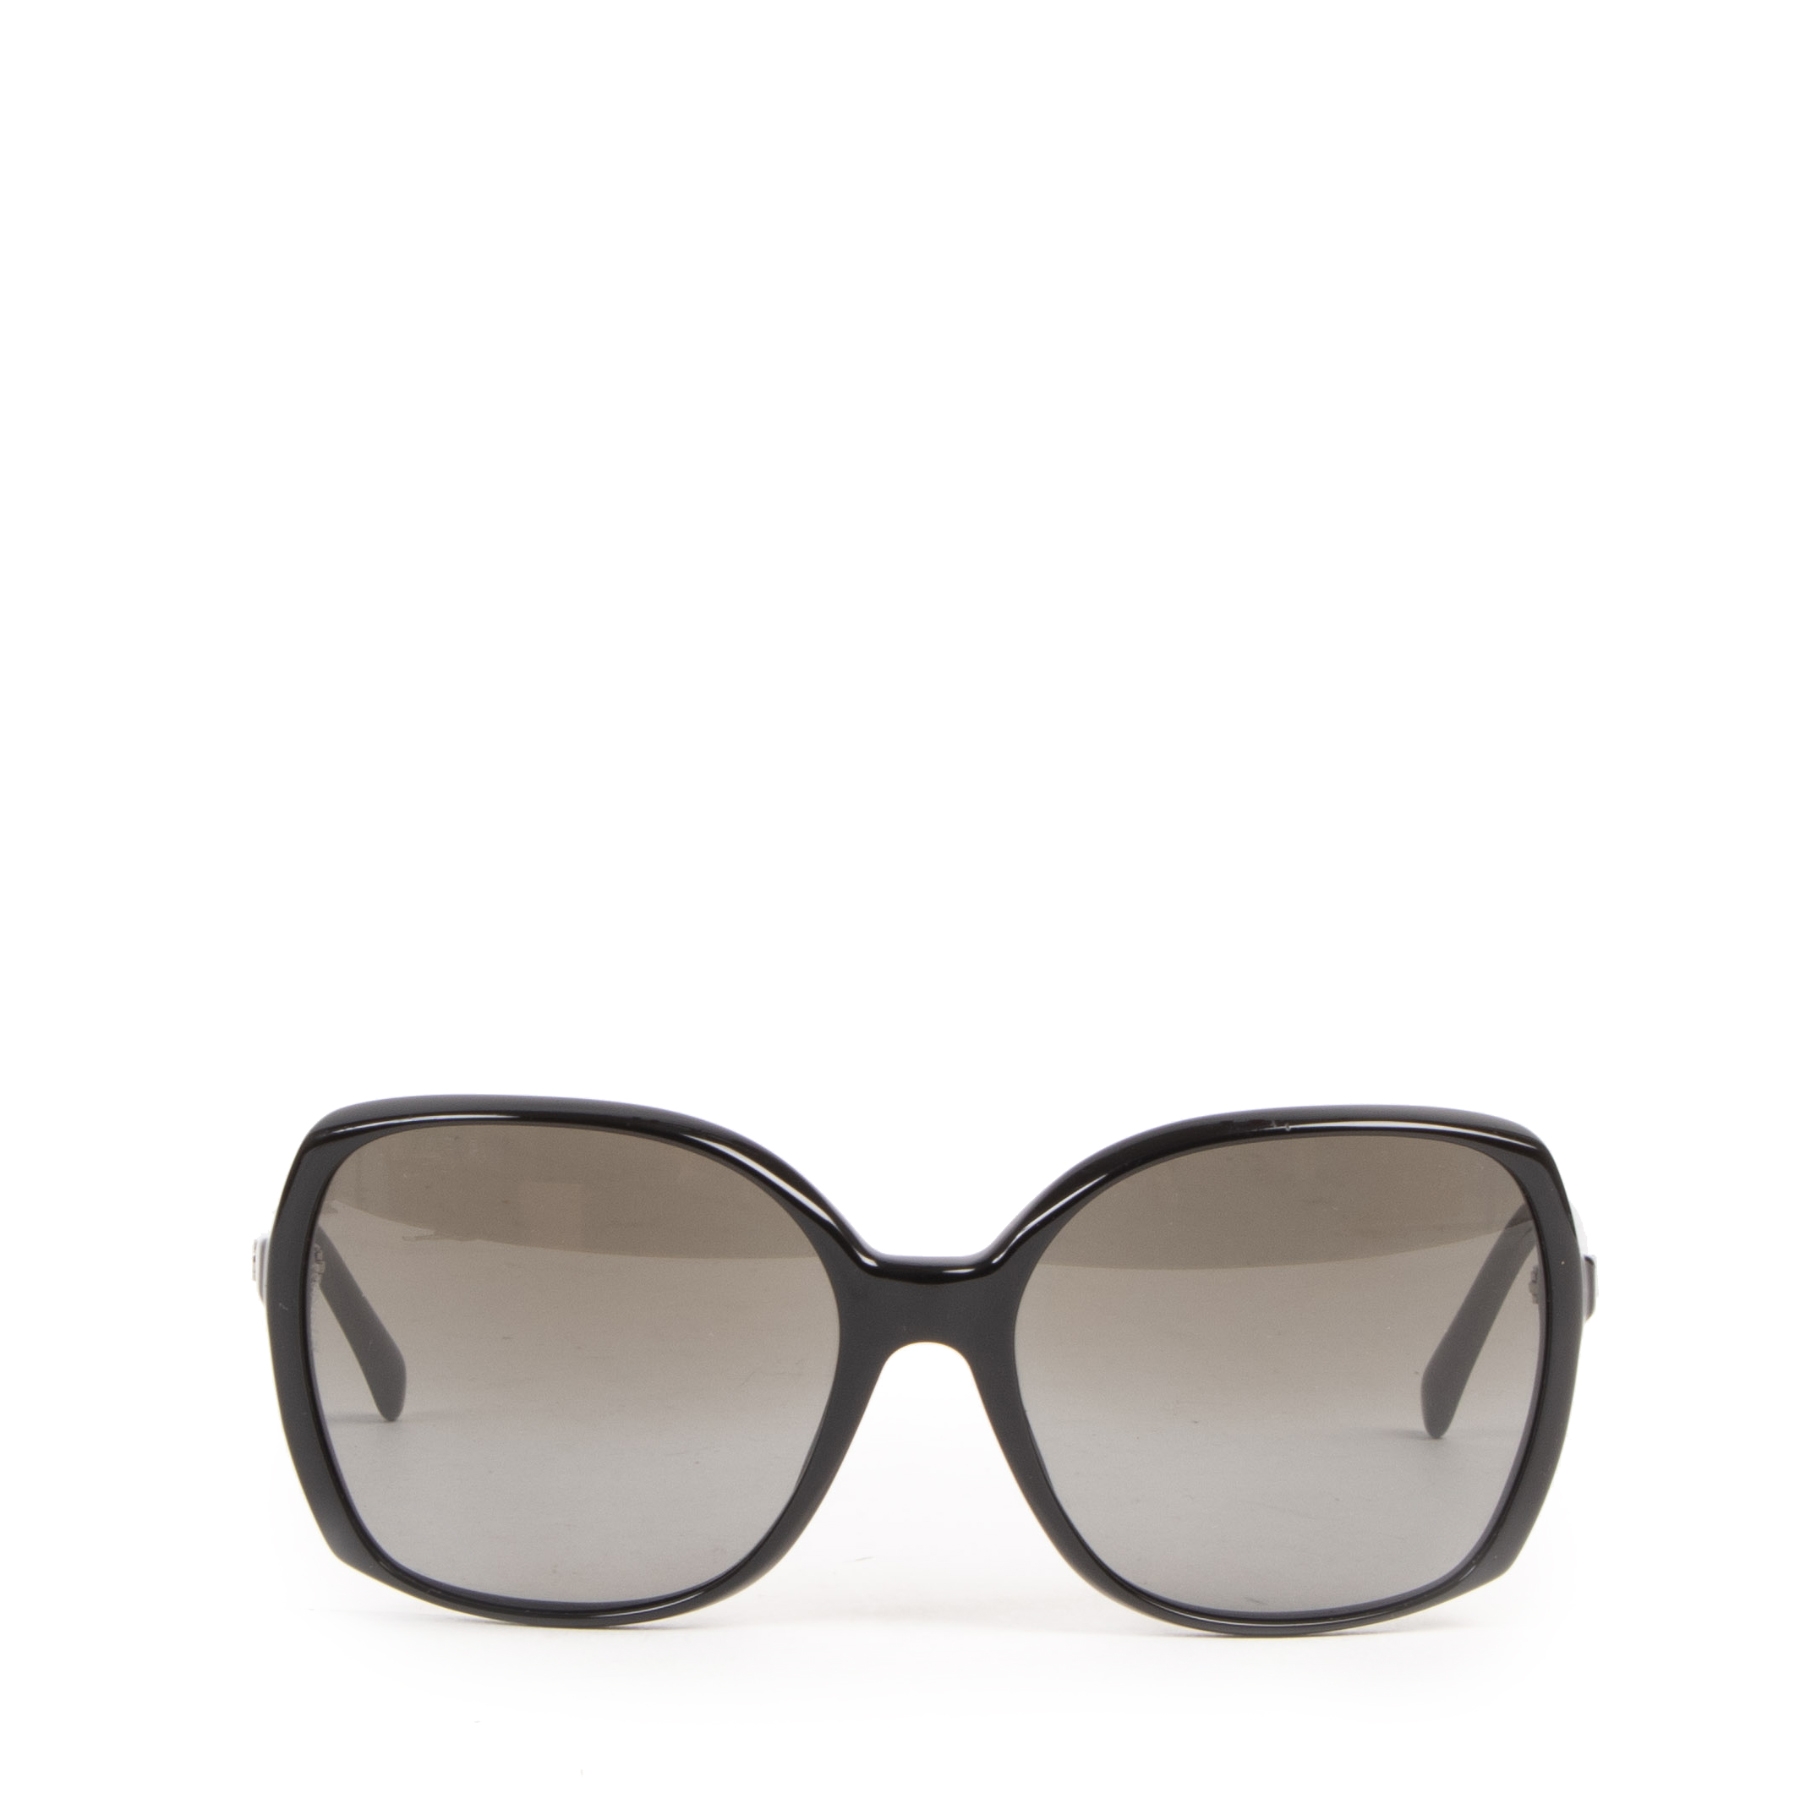 Chanel Black Square Sunglasses Labellov Buy and Sell Authentic